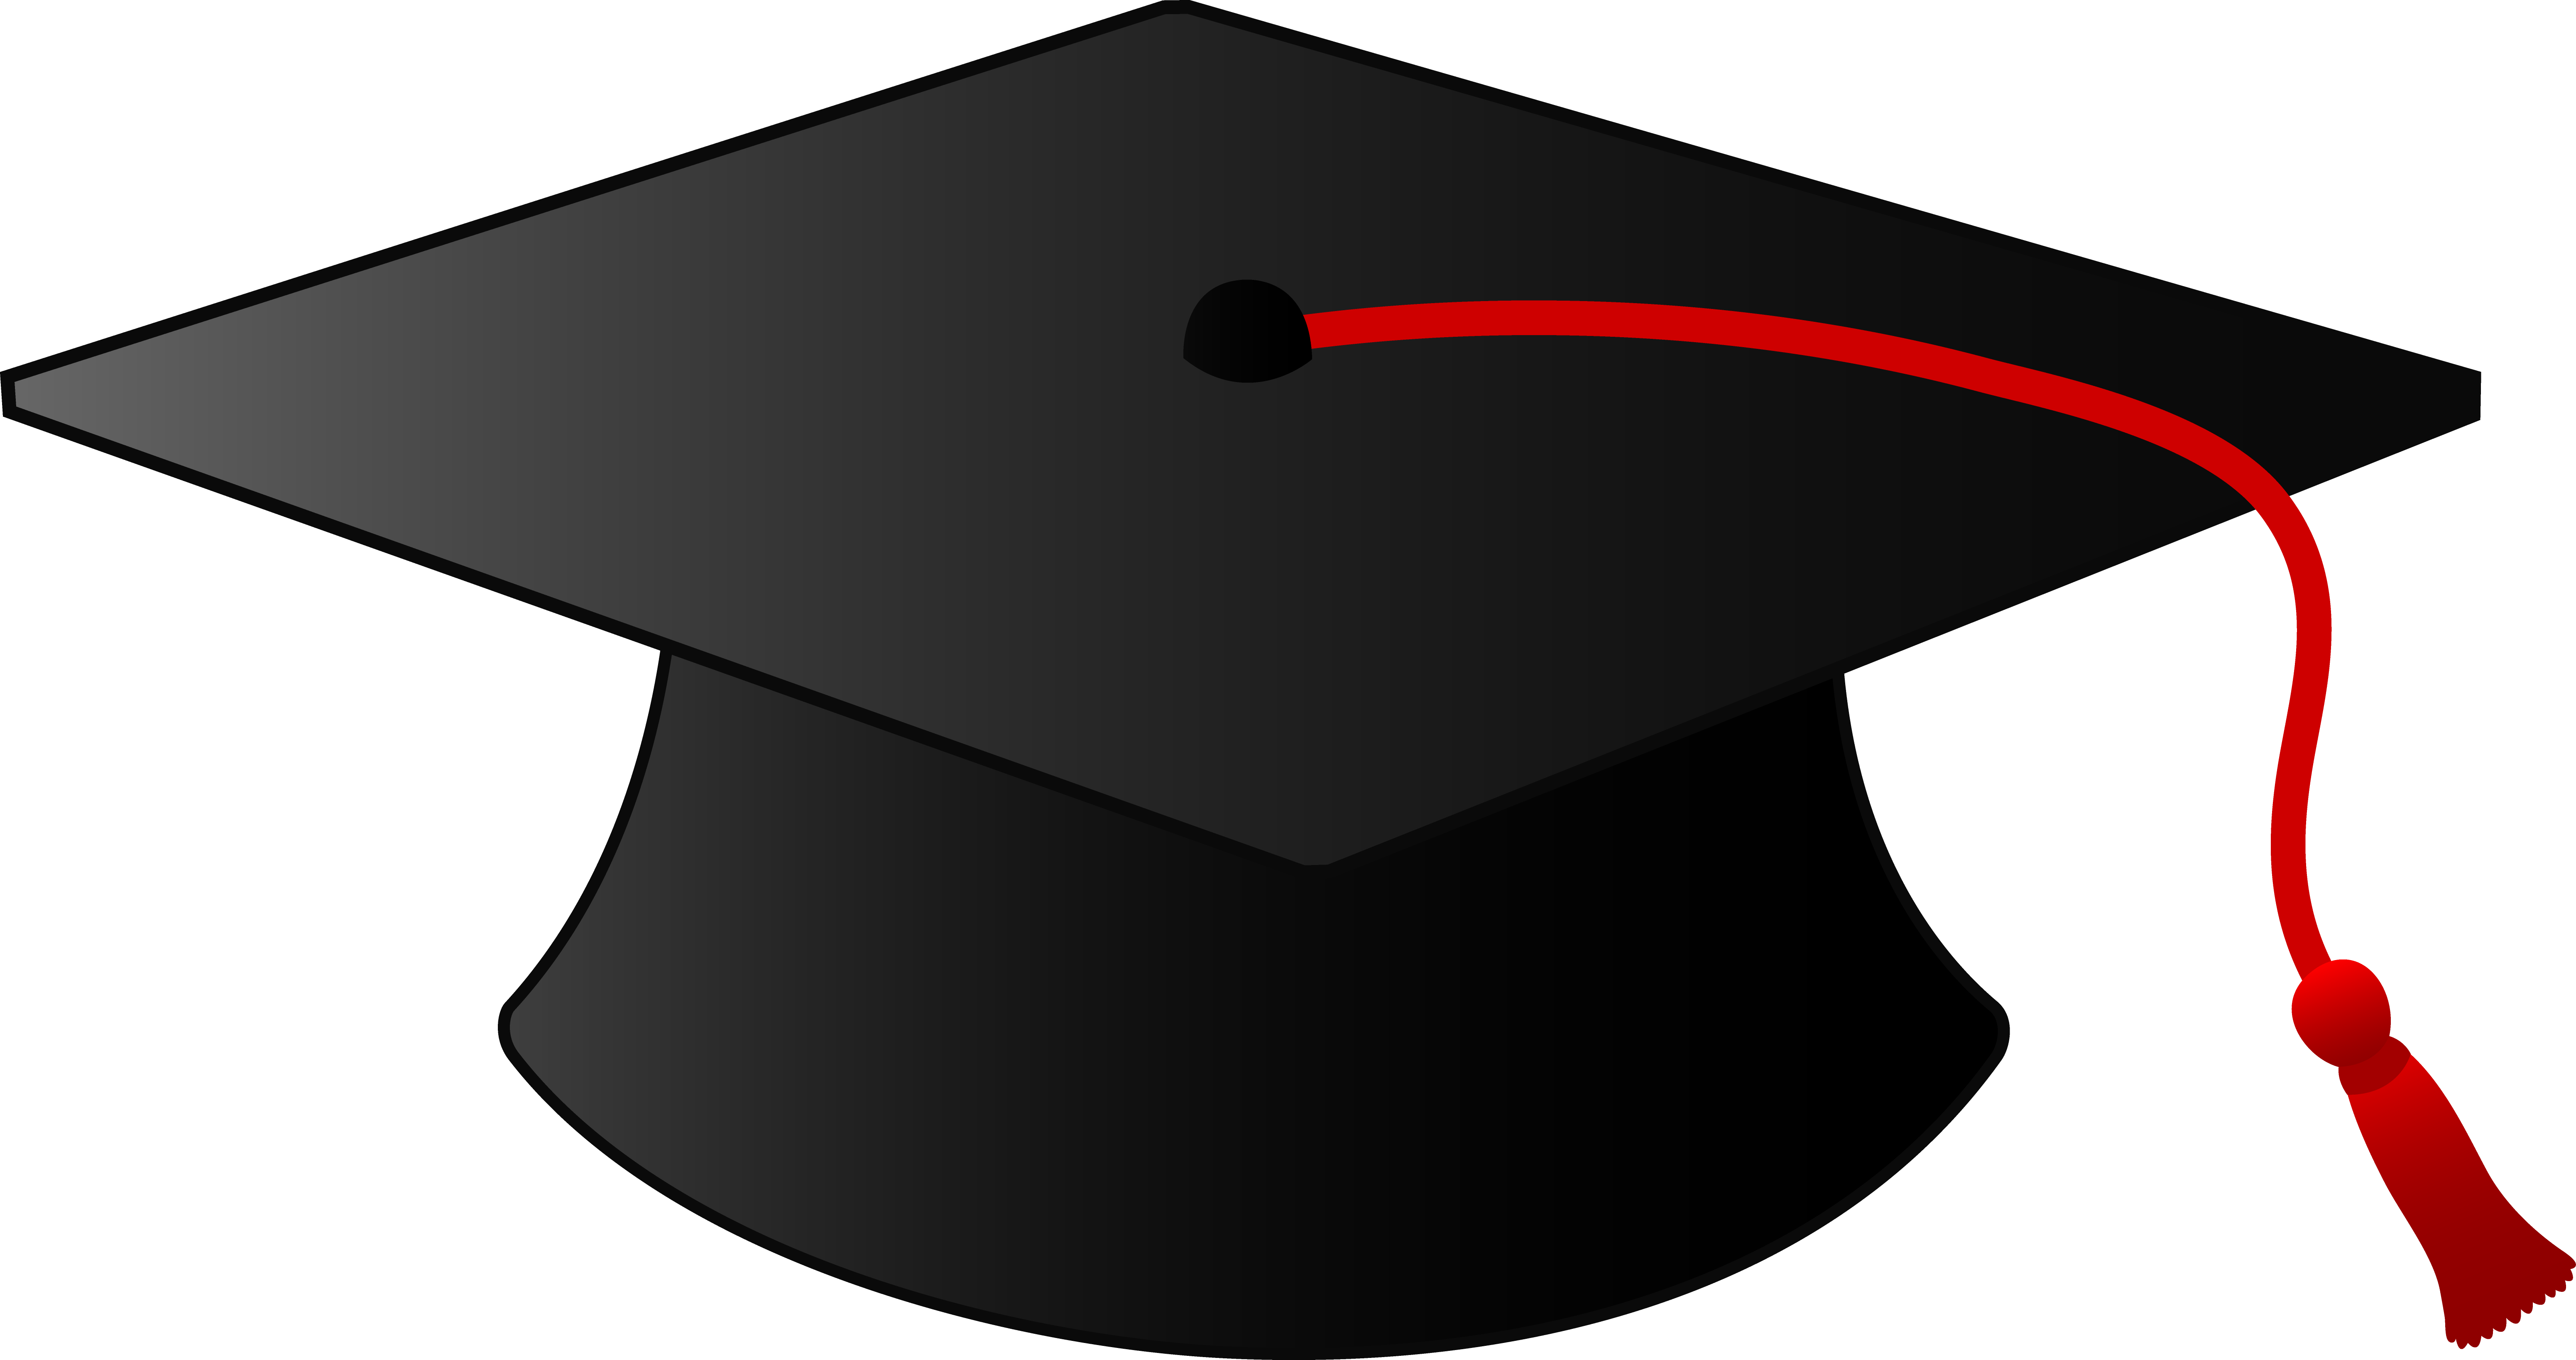 File:Graduation hat.svg